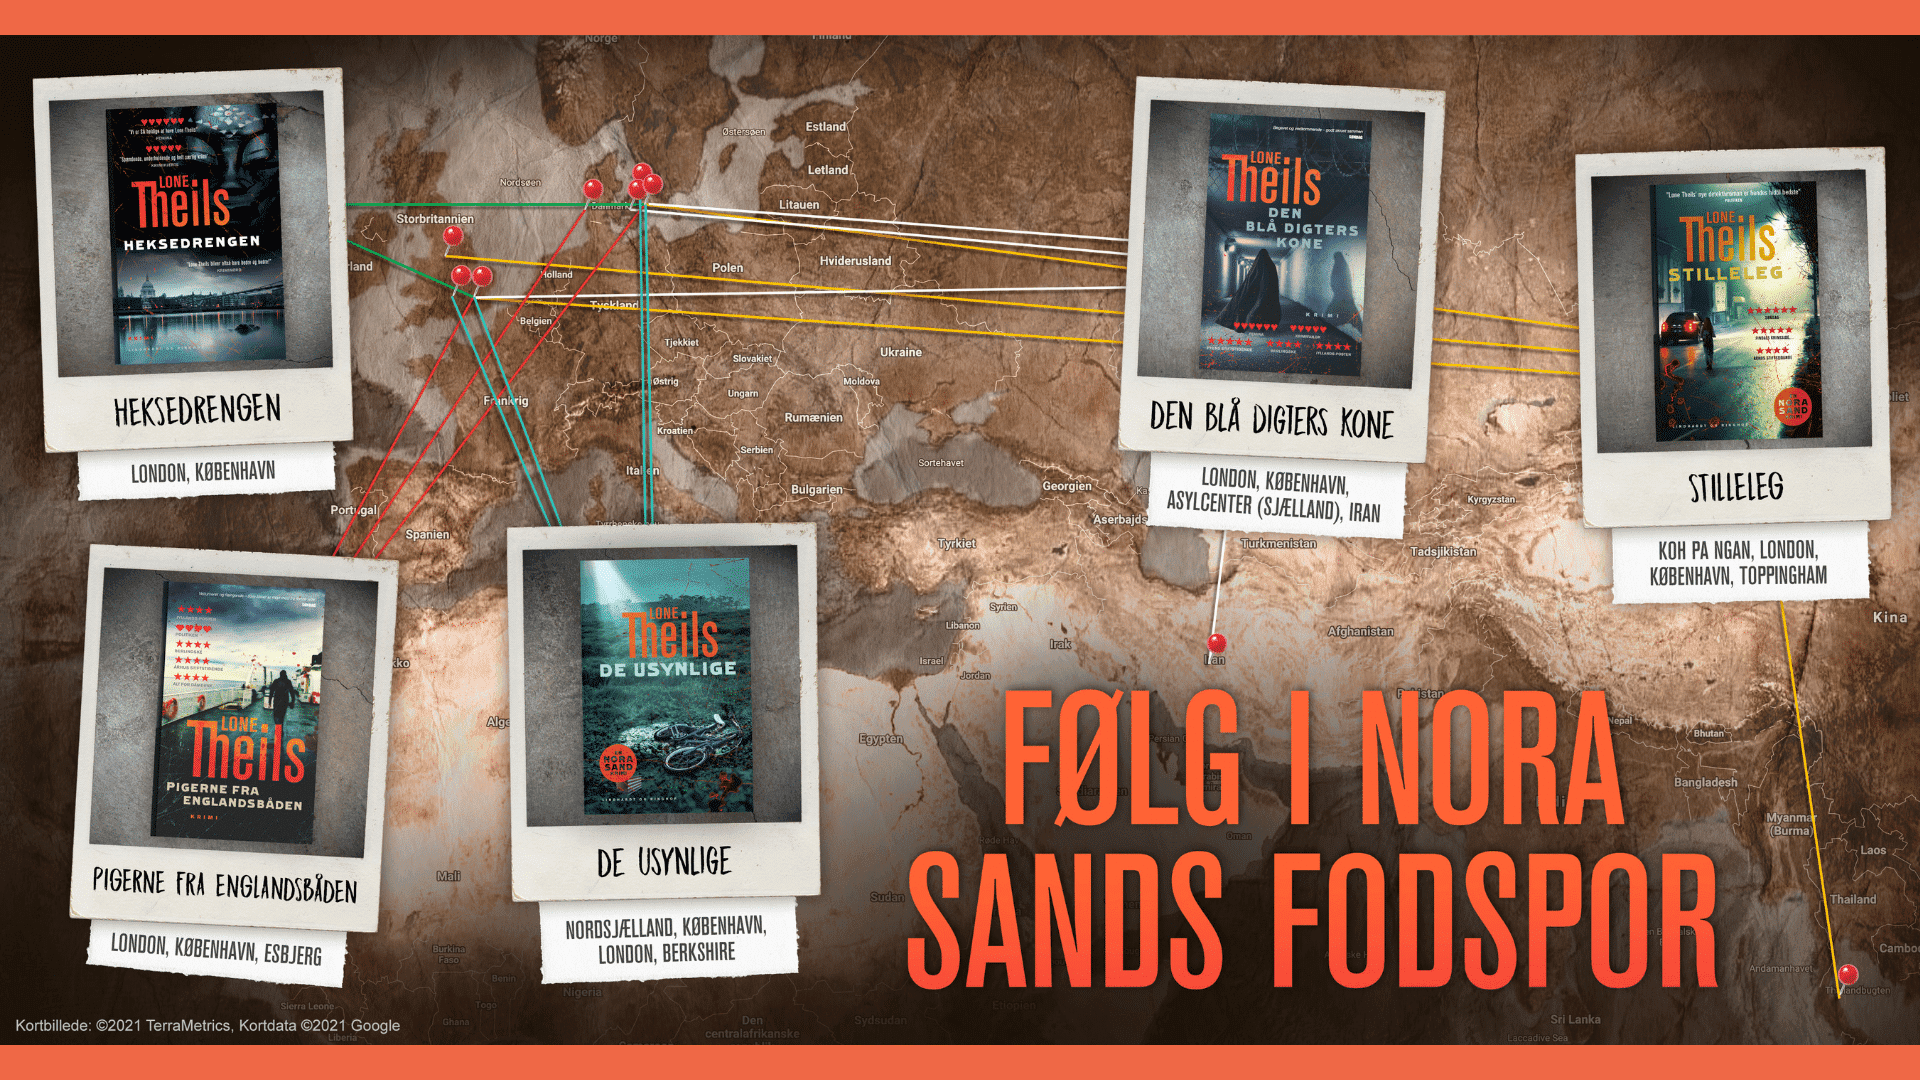 Korrespondent Nora Sand rejser verden rundt i Lone Theils' bestseller-krimiserie